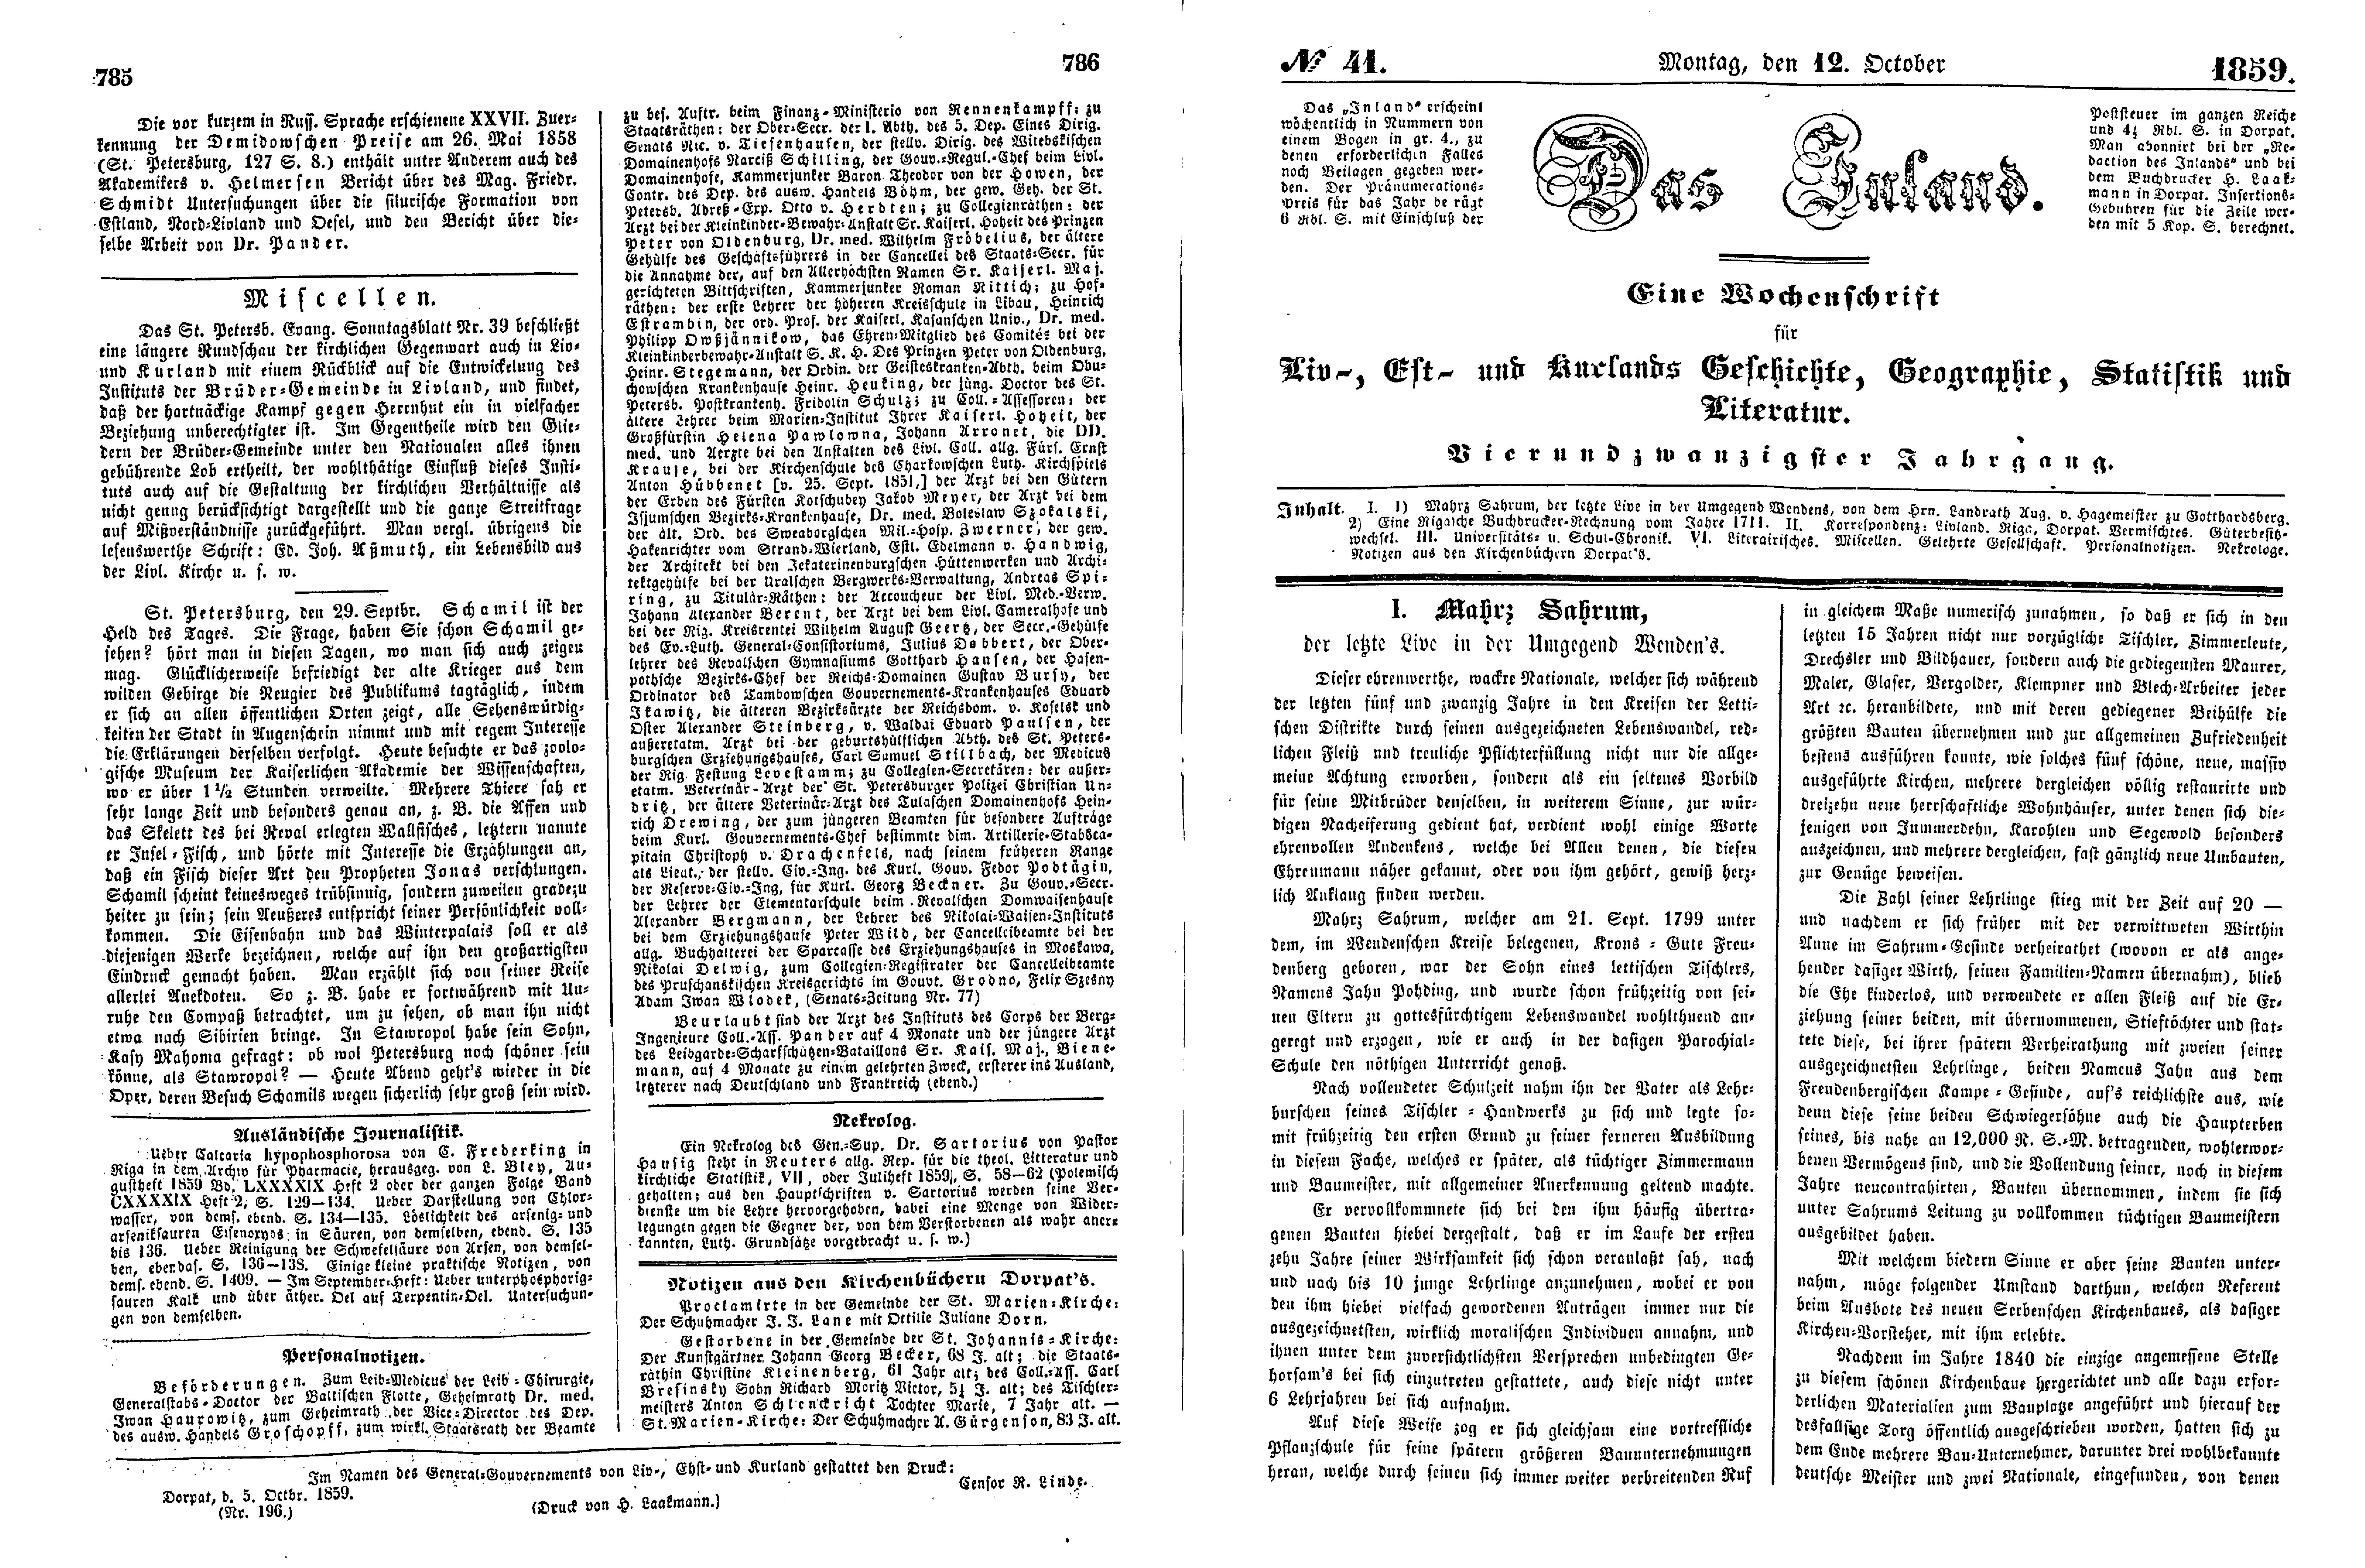 Das Inland [24] (1859) | 207. (785-788) Main body of text